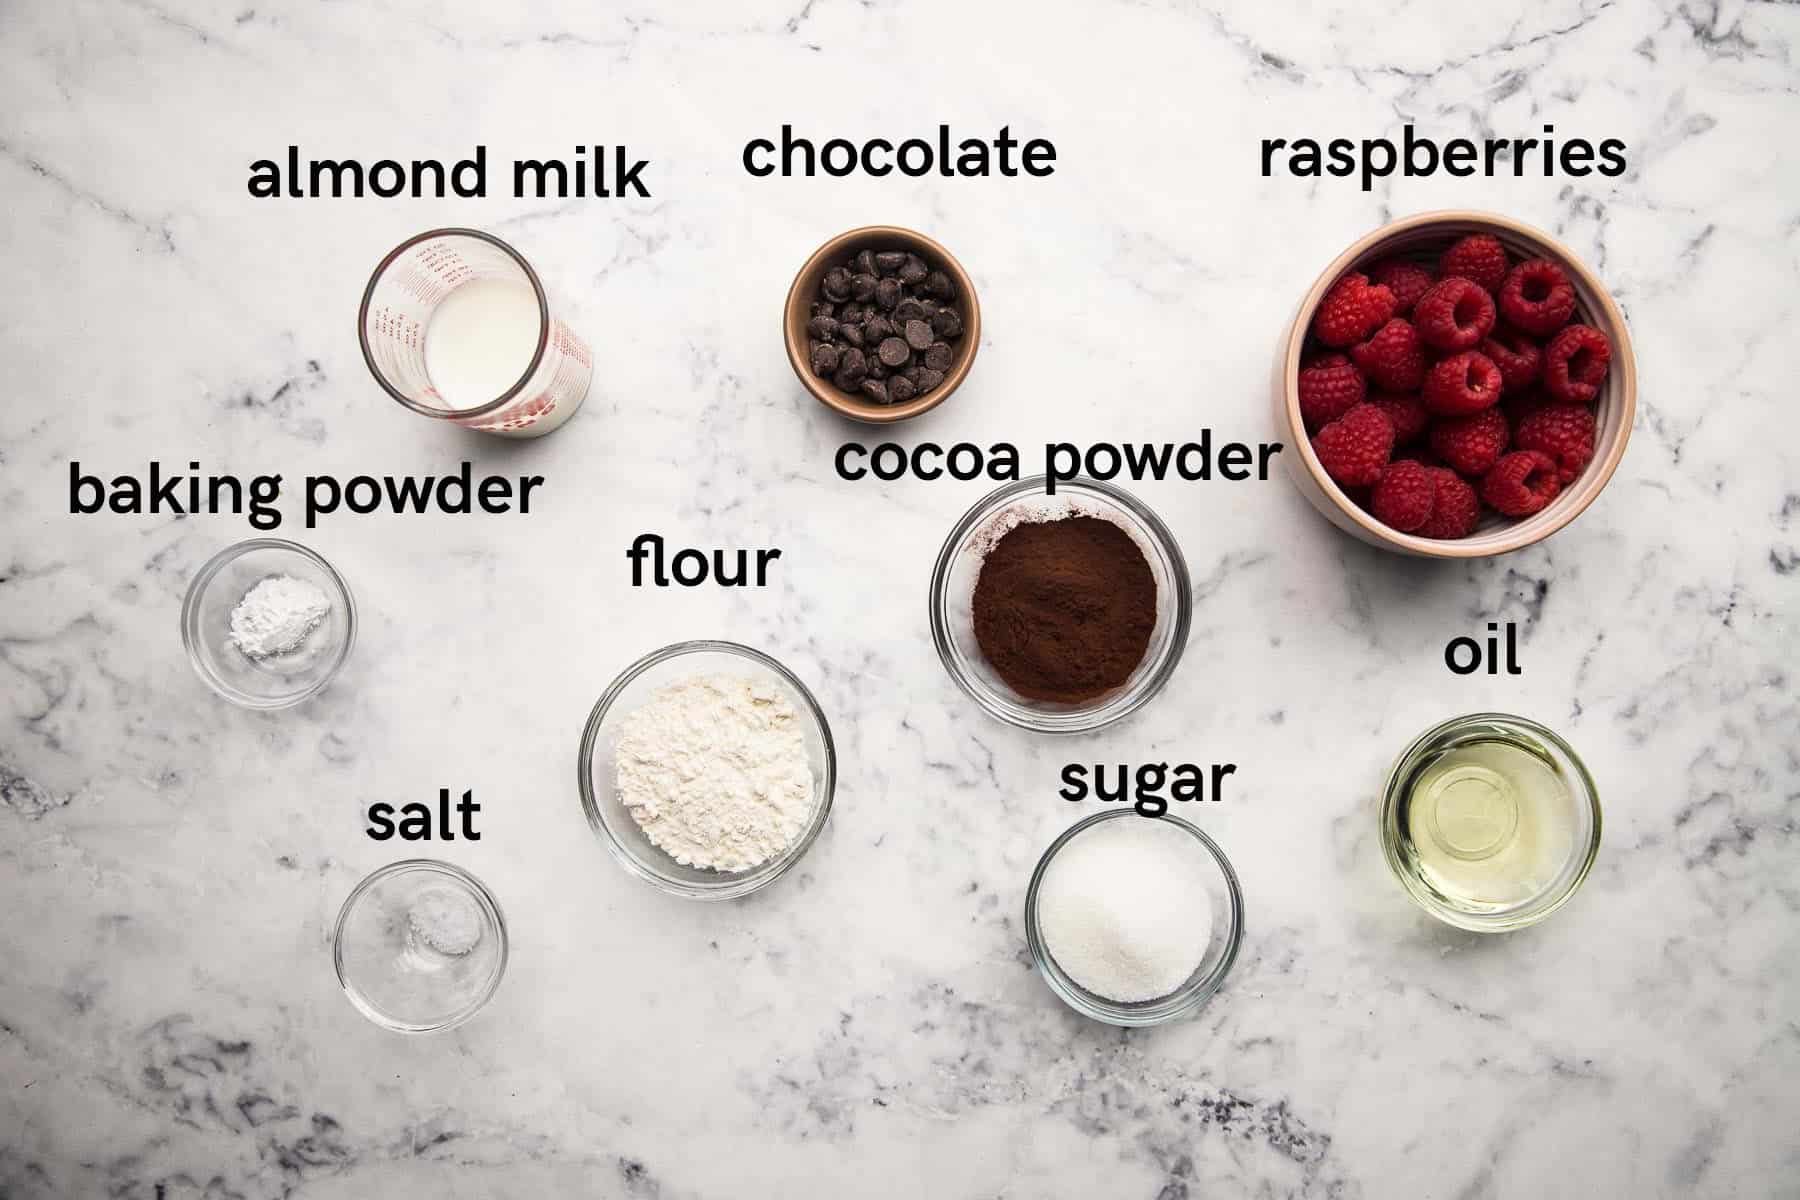 Picture of almond milk, chocolate, raspberries, baking powder, flour, salt, sugar, and oil.